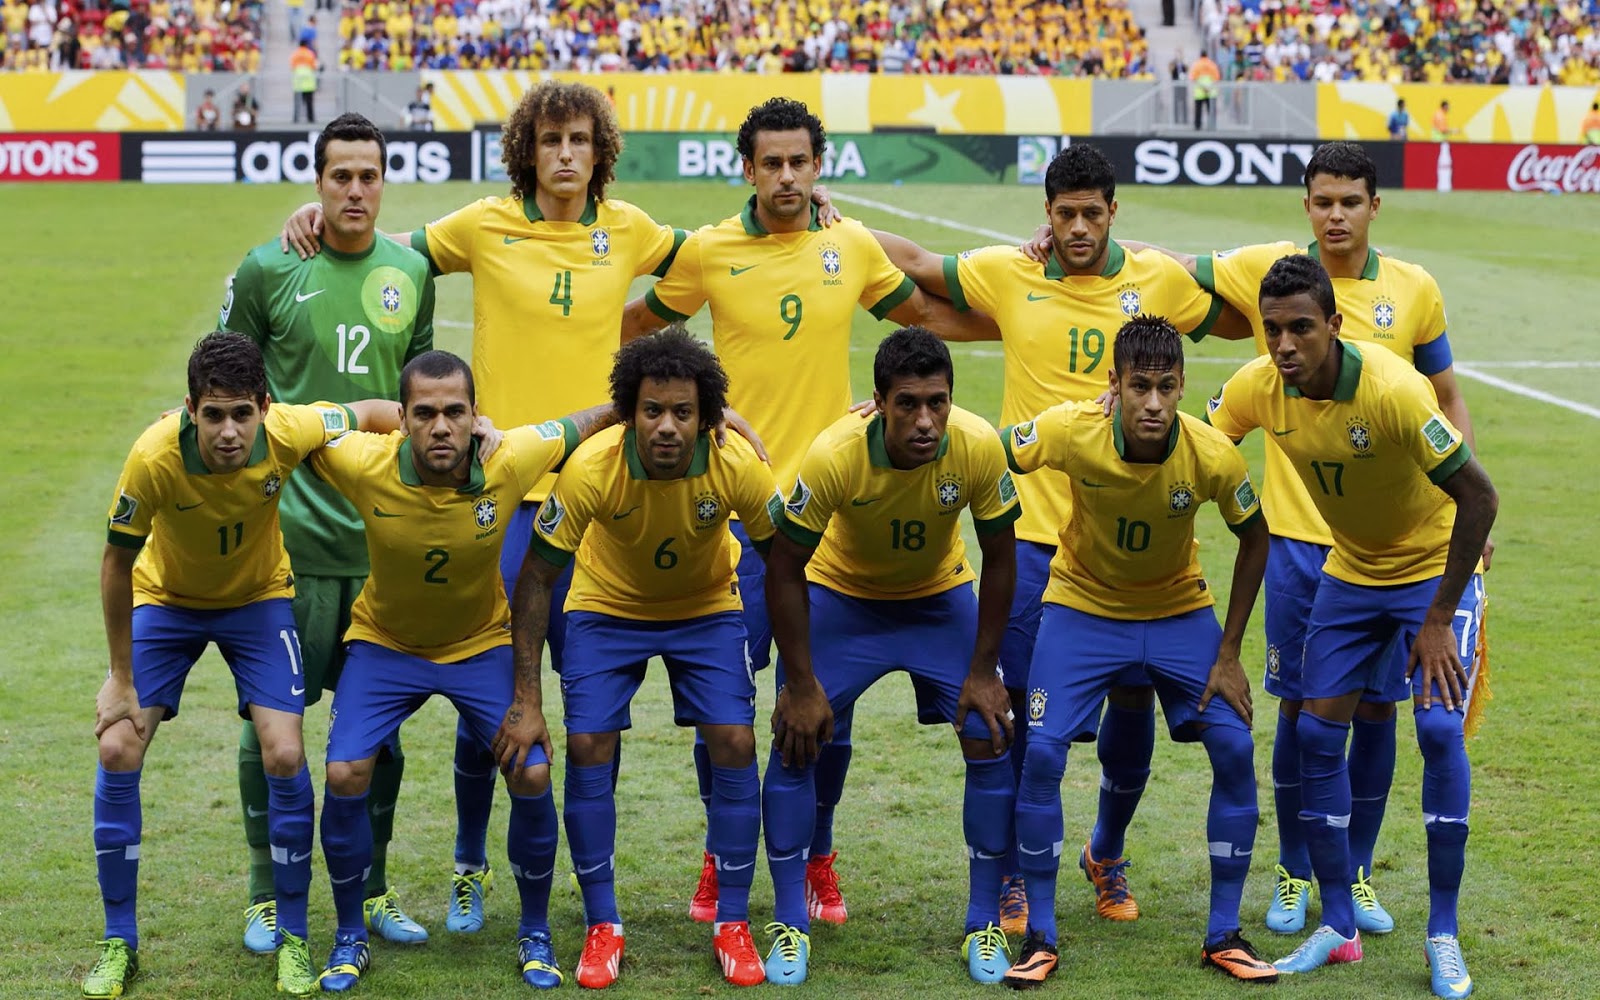 Berita Bola Piala Dunia Brazil 2014 November 2013